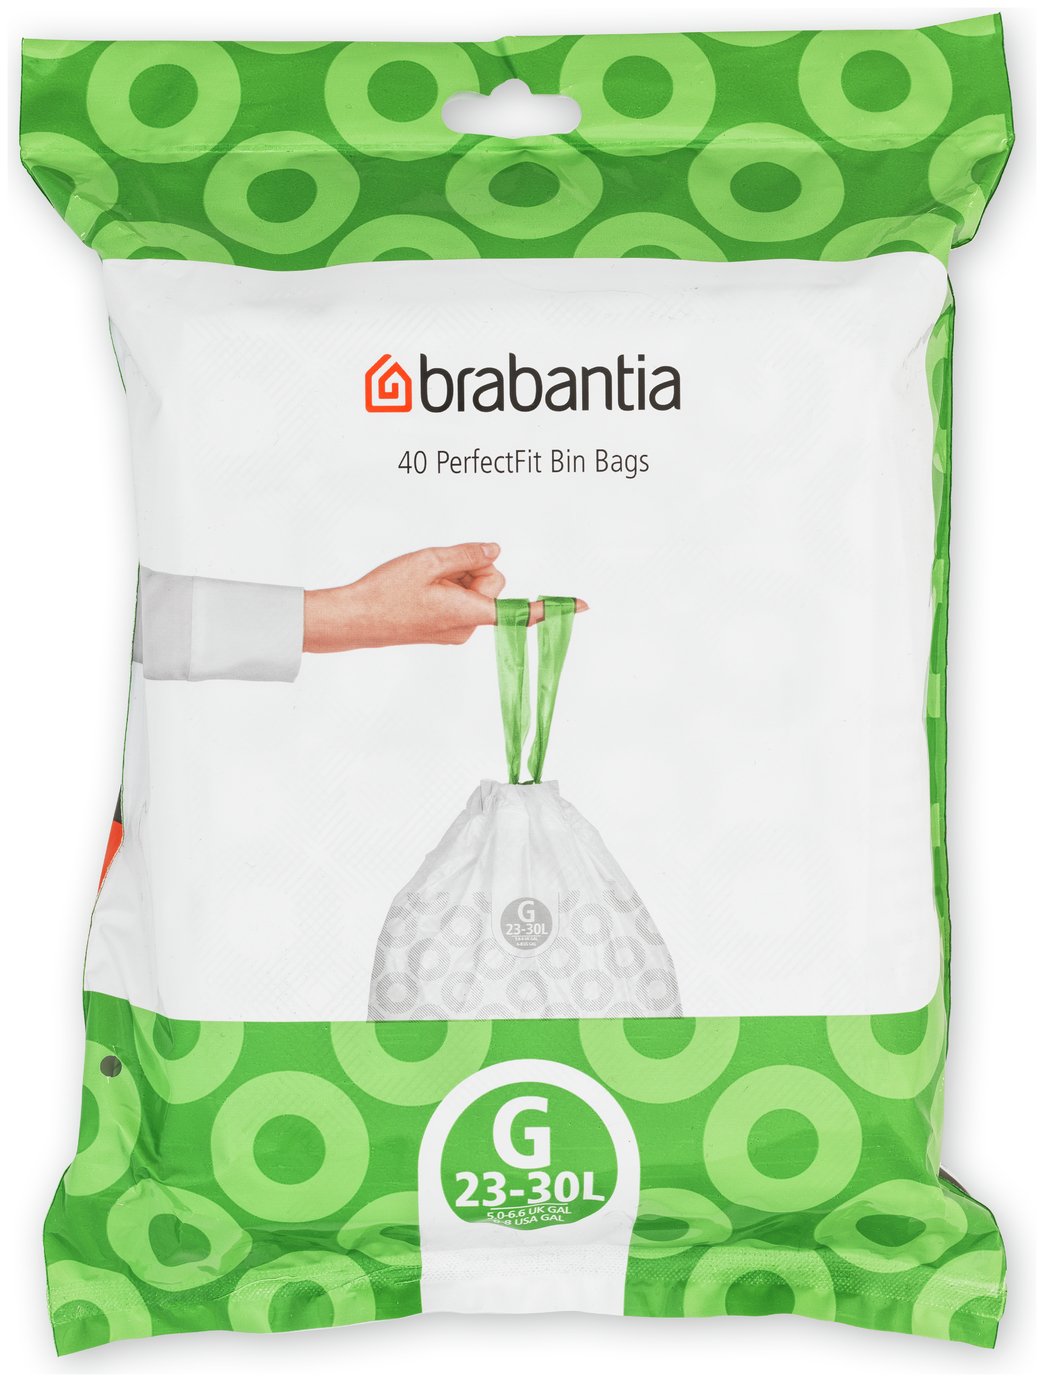 Brabantia 30 Litre Perfect Fit Bin Bags Size G Review